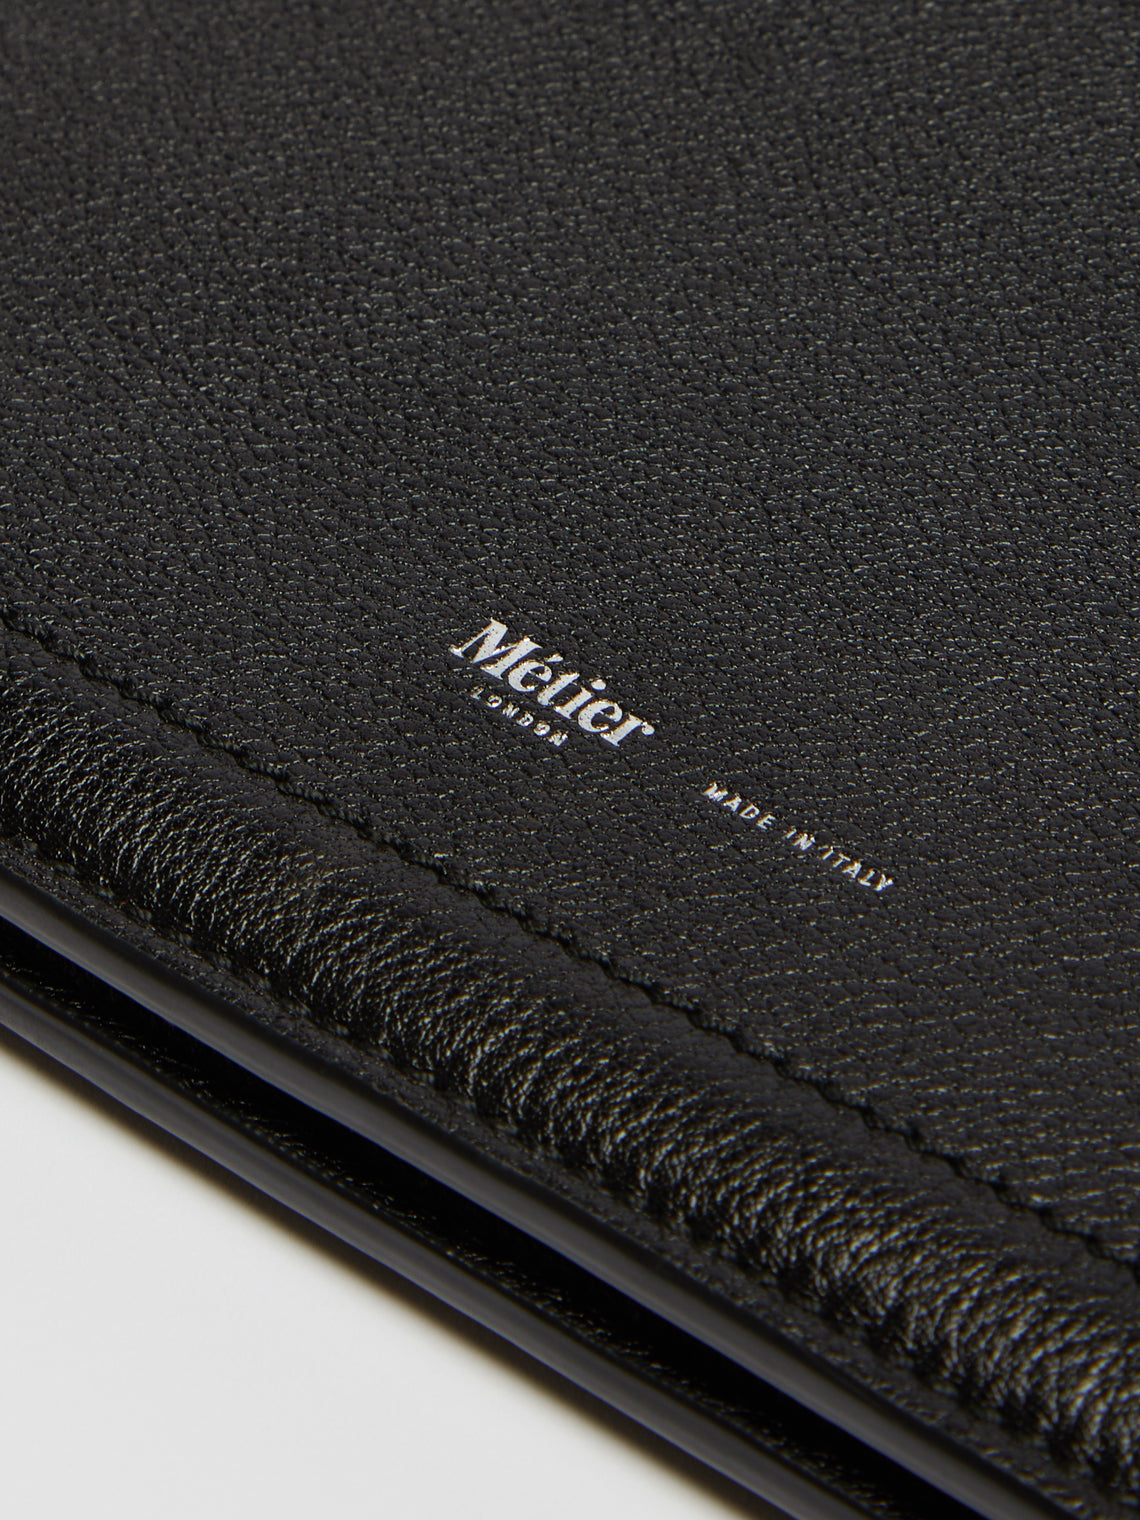 Métier - Metropolitan Leather Laptop Case - Black - ABASK